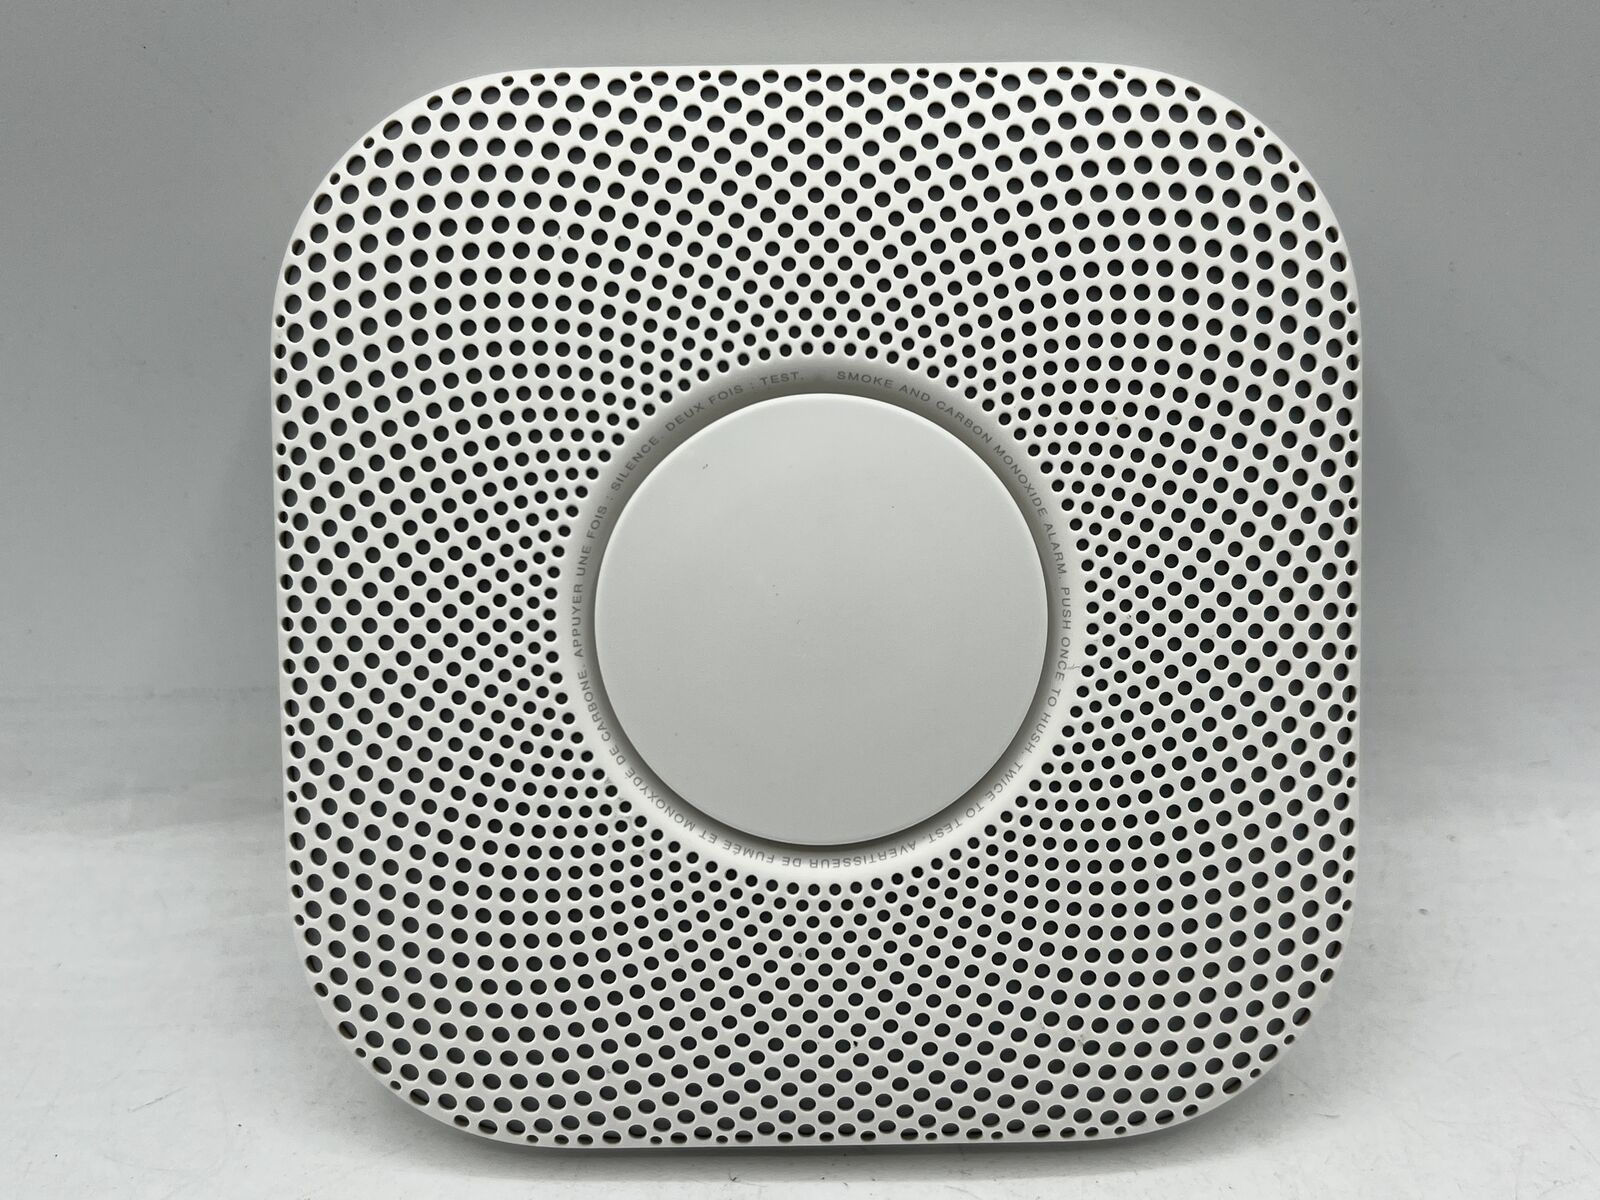 Google Nest 06A S3000BWES Battery Protect Smoke Carbon Monoxide Alarm Used 2033